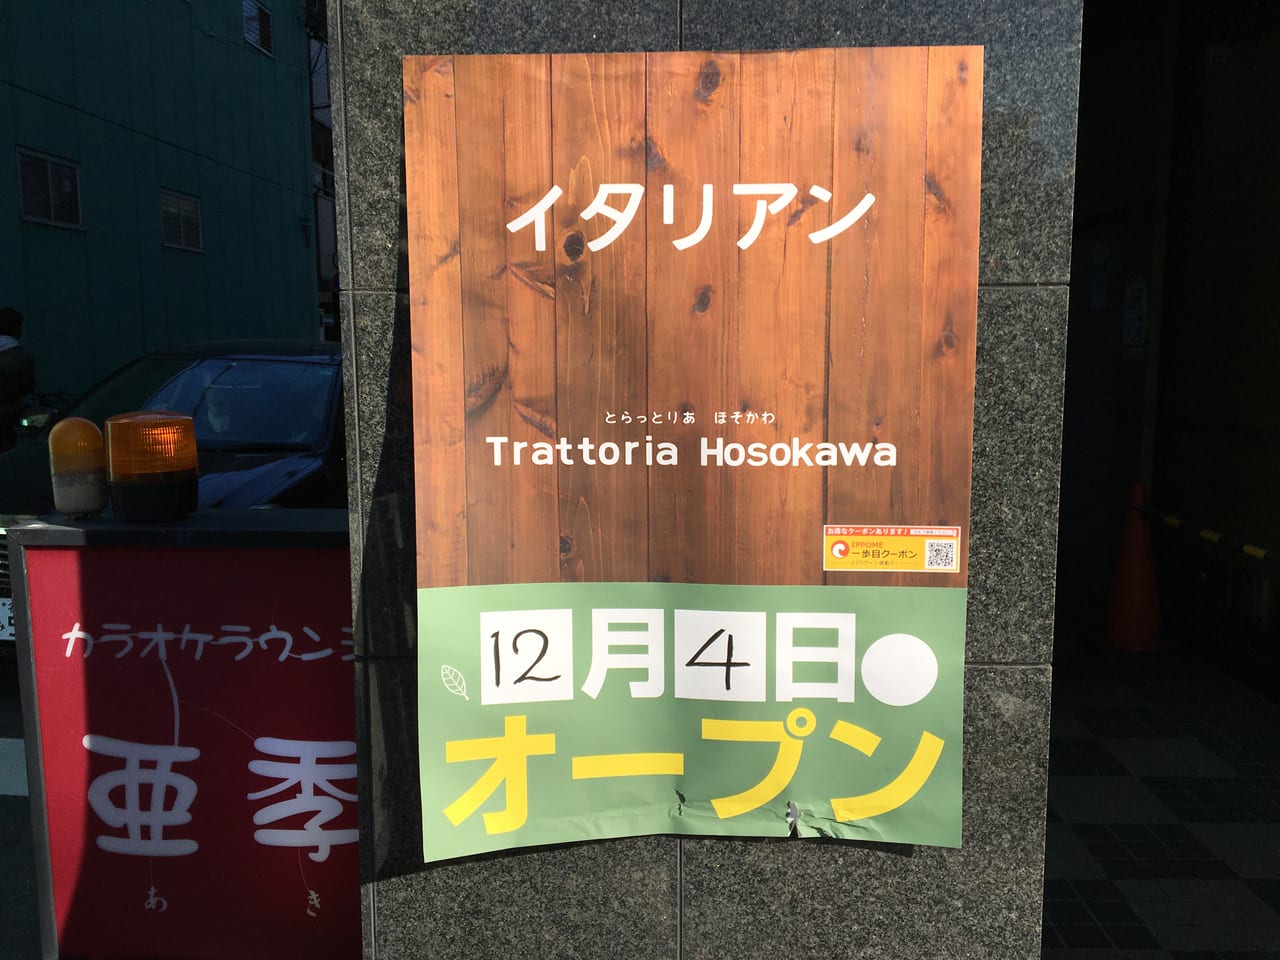 Trattoria Hosokawa